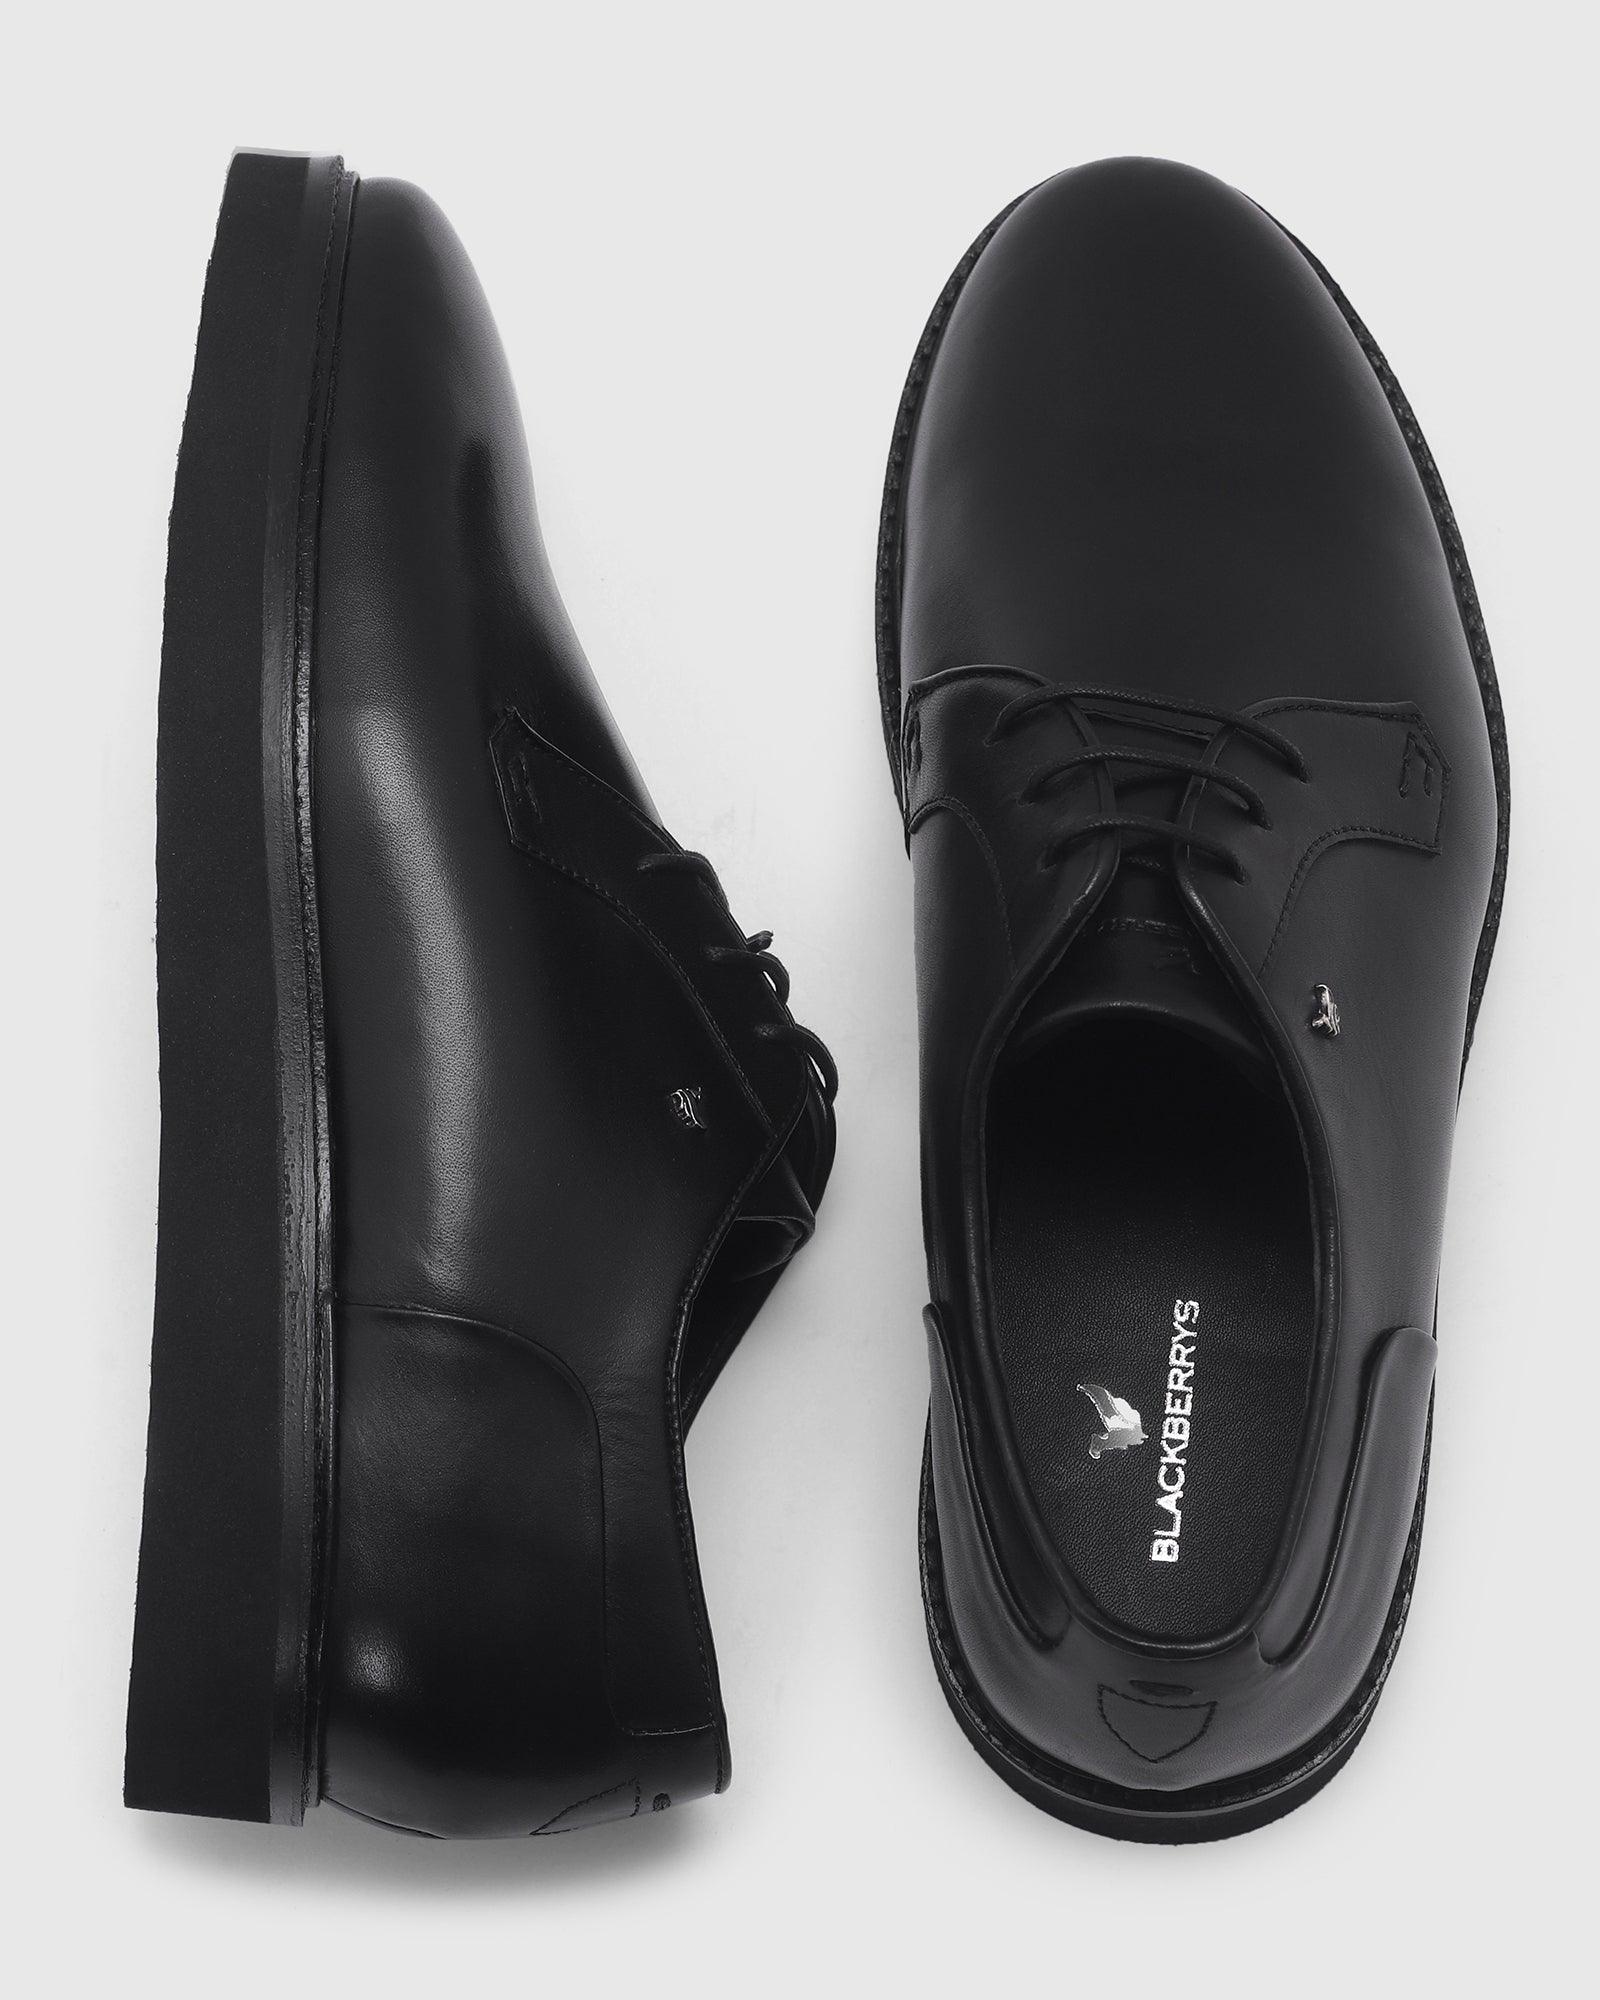 Leather Formal Black Solid Derby Shoes - Prex